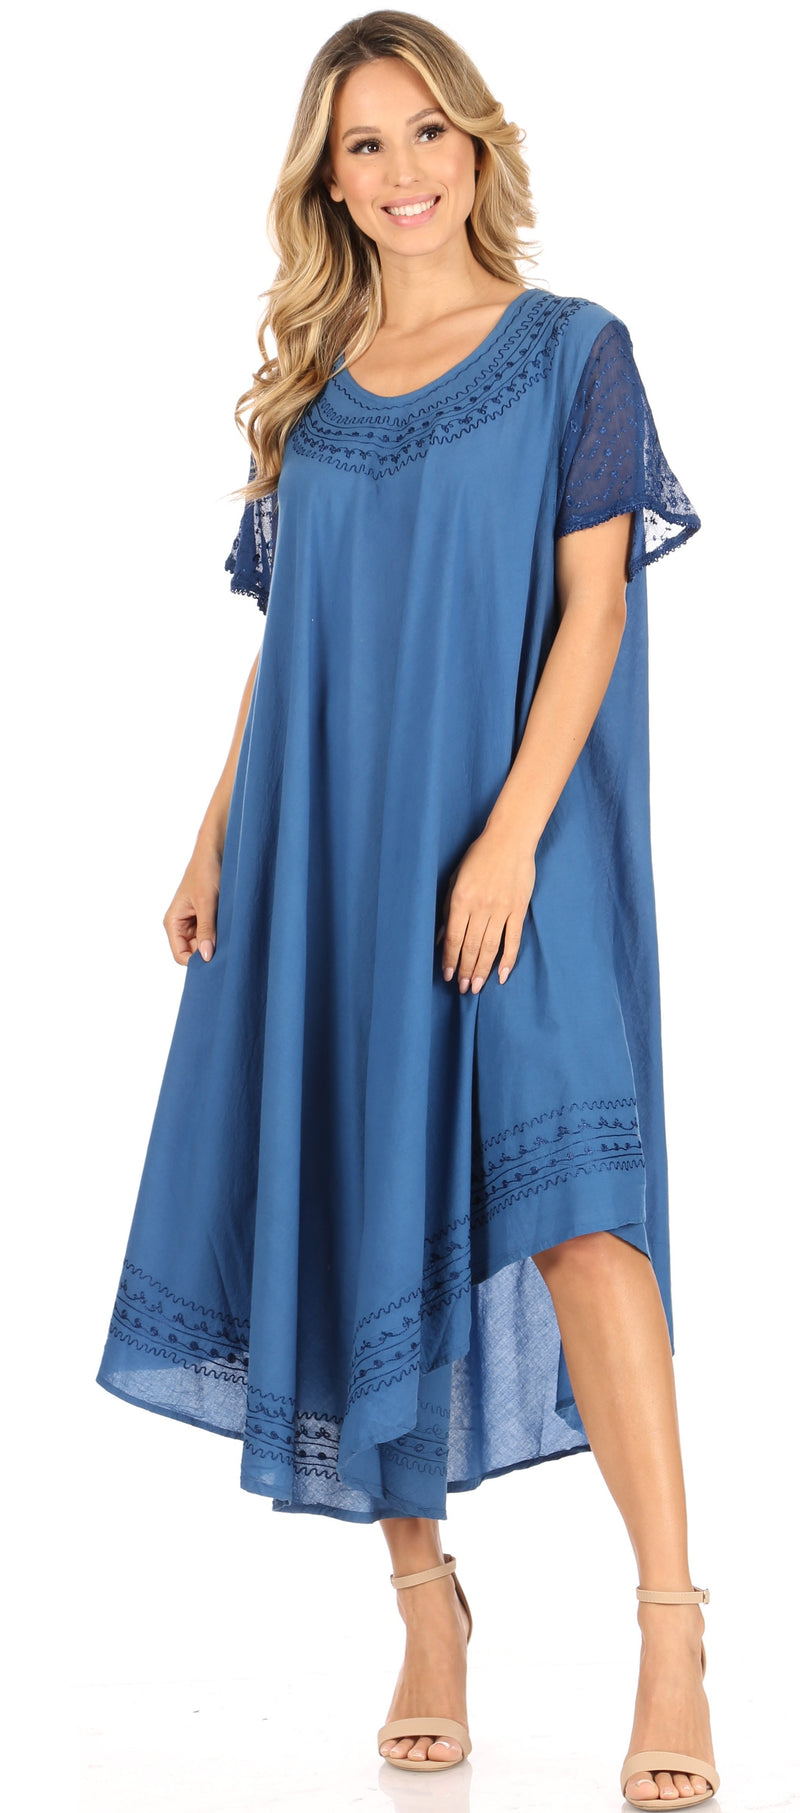 Sakkas Ines Cotton Everyday Essentials Cap Sleeve Caftan Dress Kaftan Cover Up